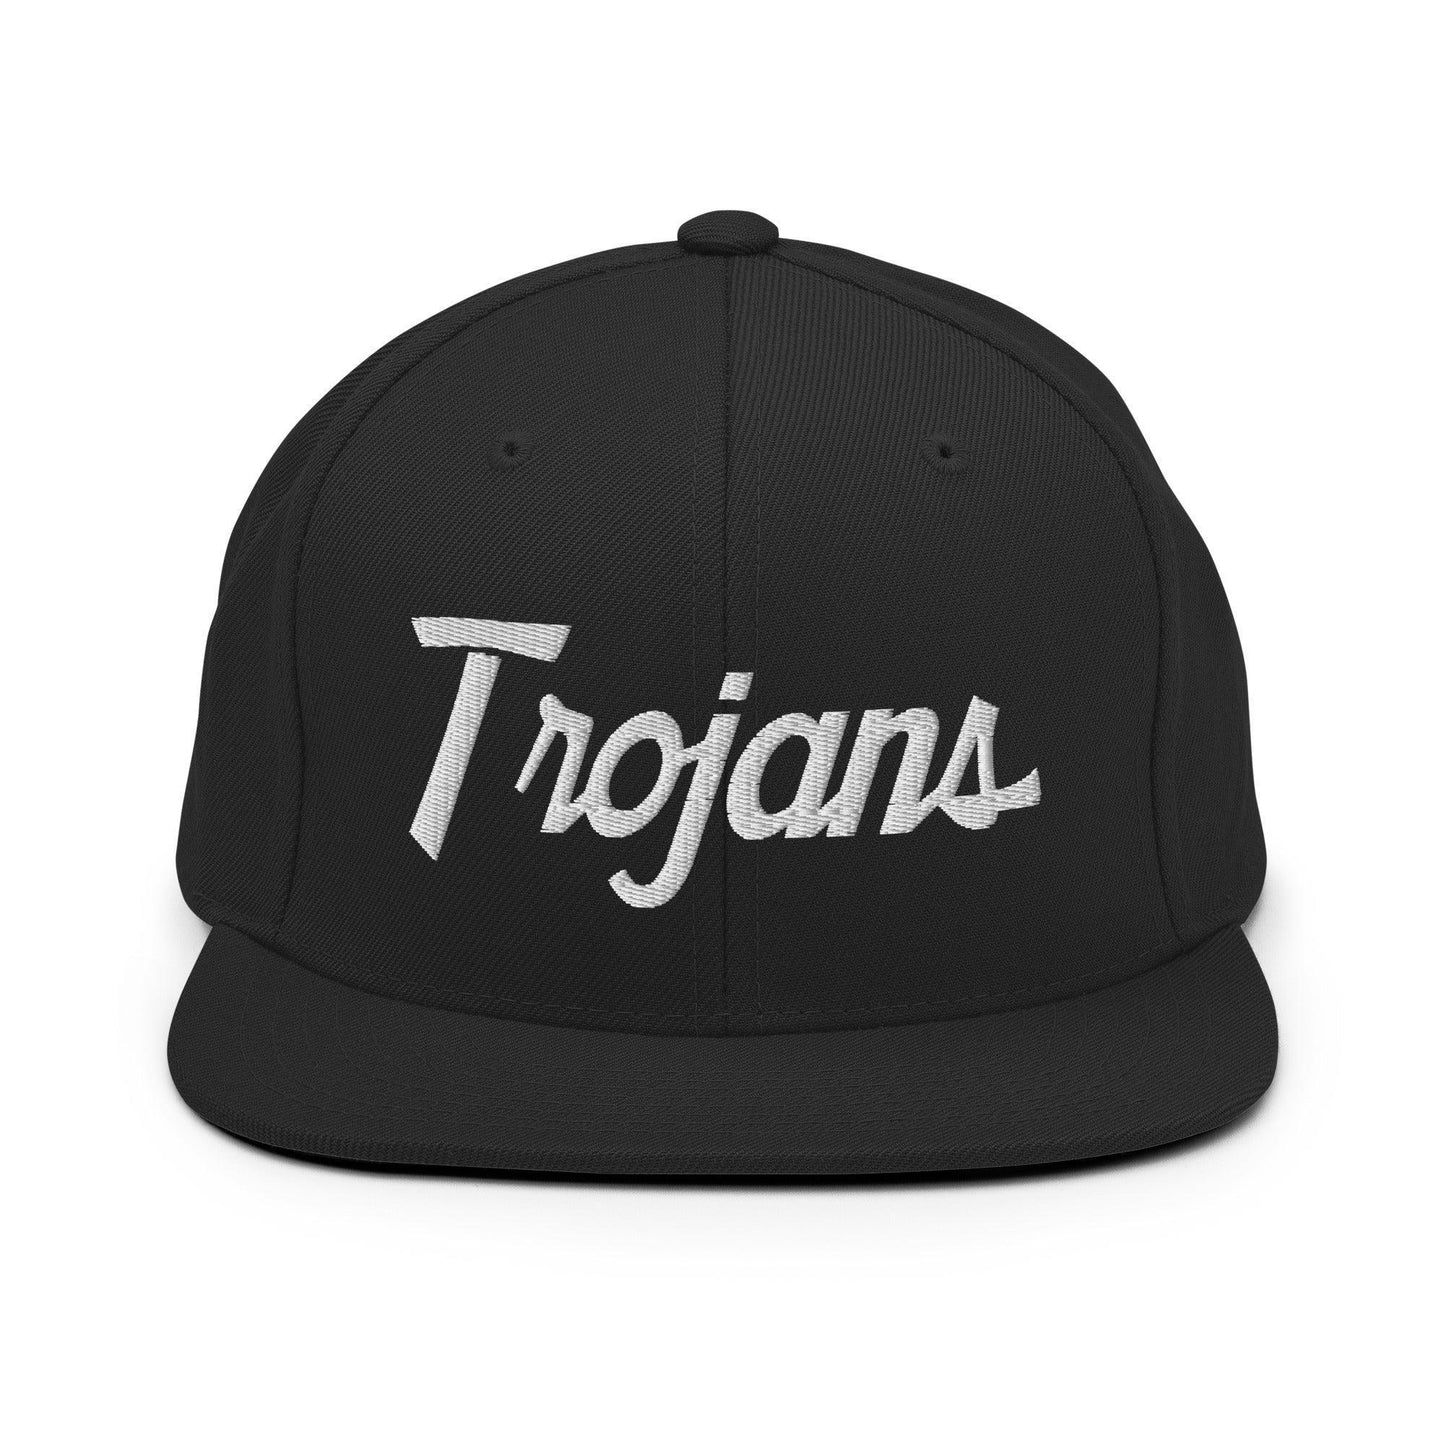 Trojans School Mascot Script Snapback Hat Black